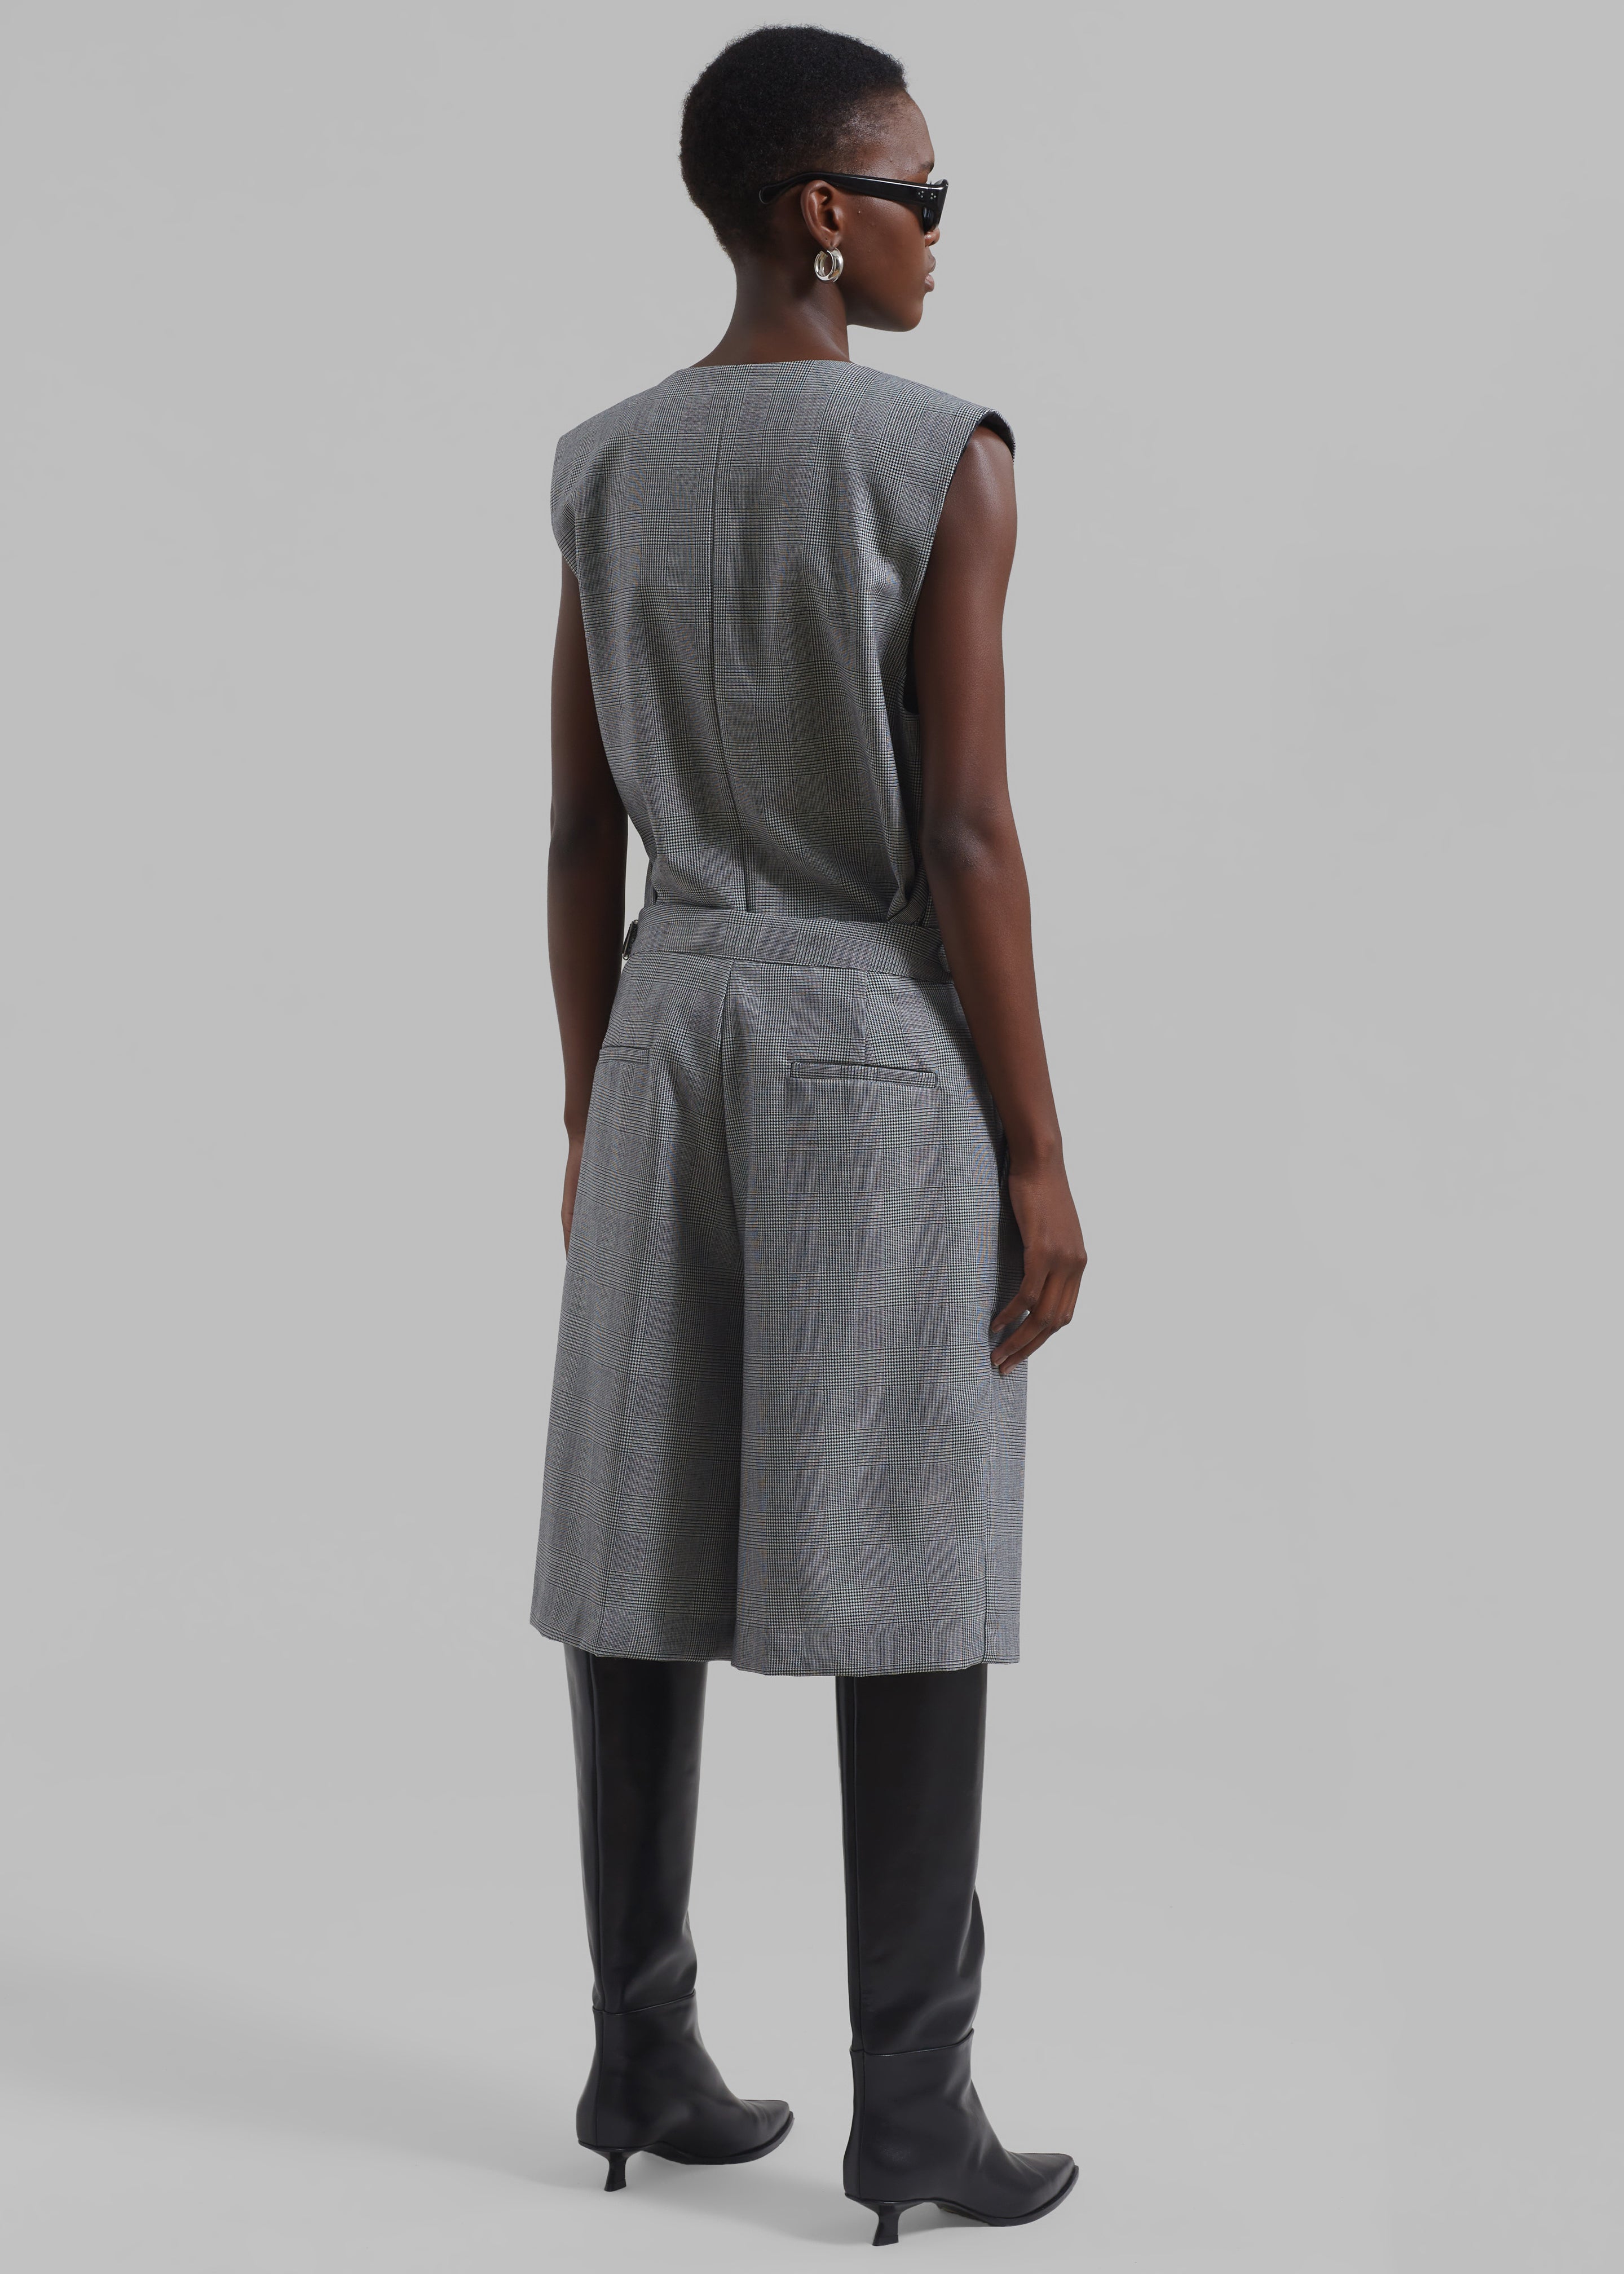 Essie Wool Bermuda Shorts - Light Grey Plaid - 9